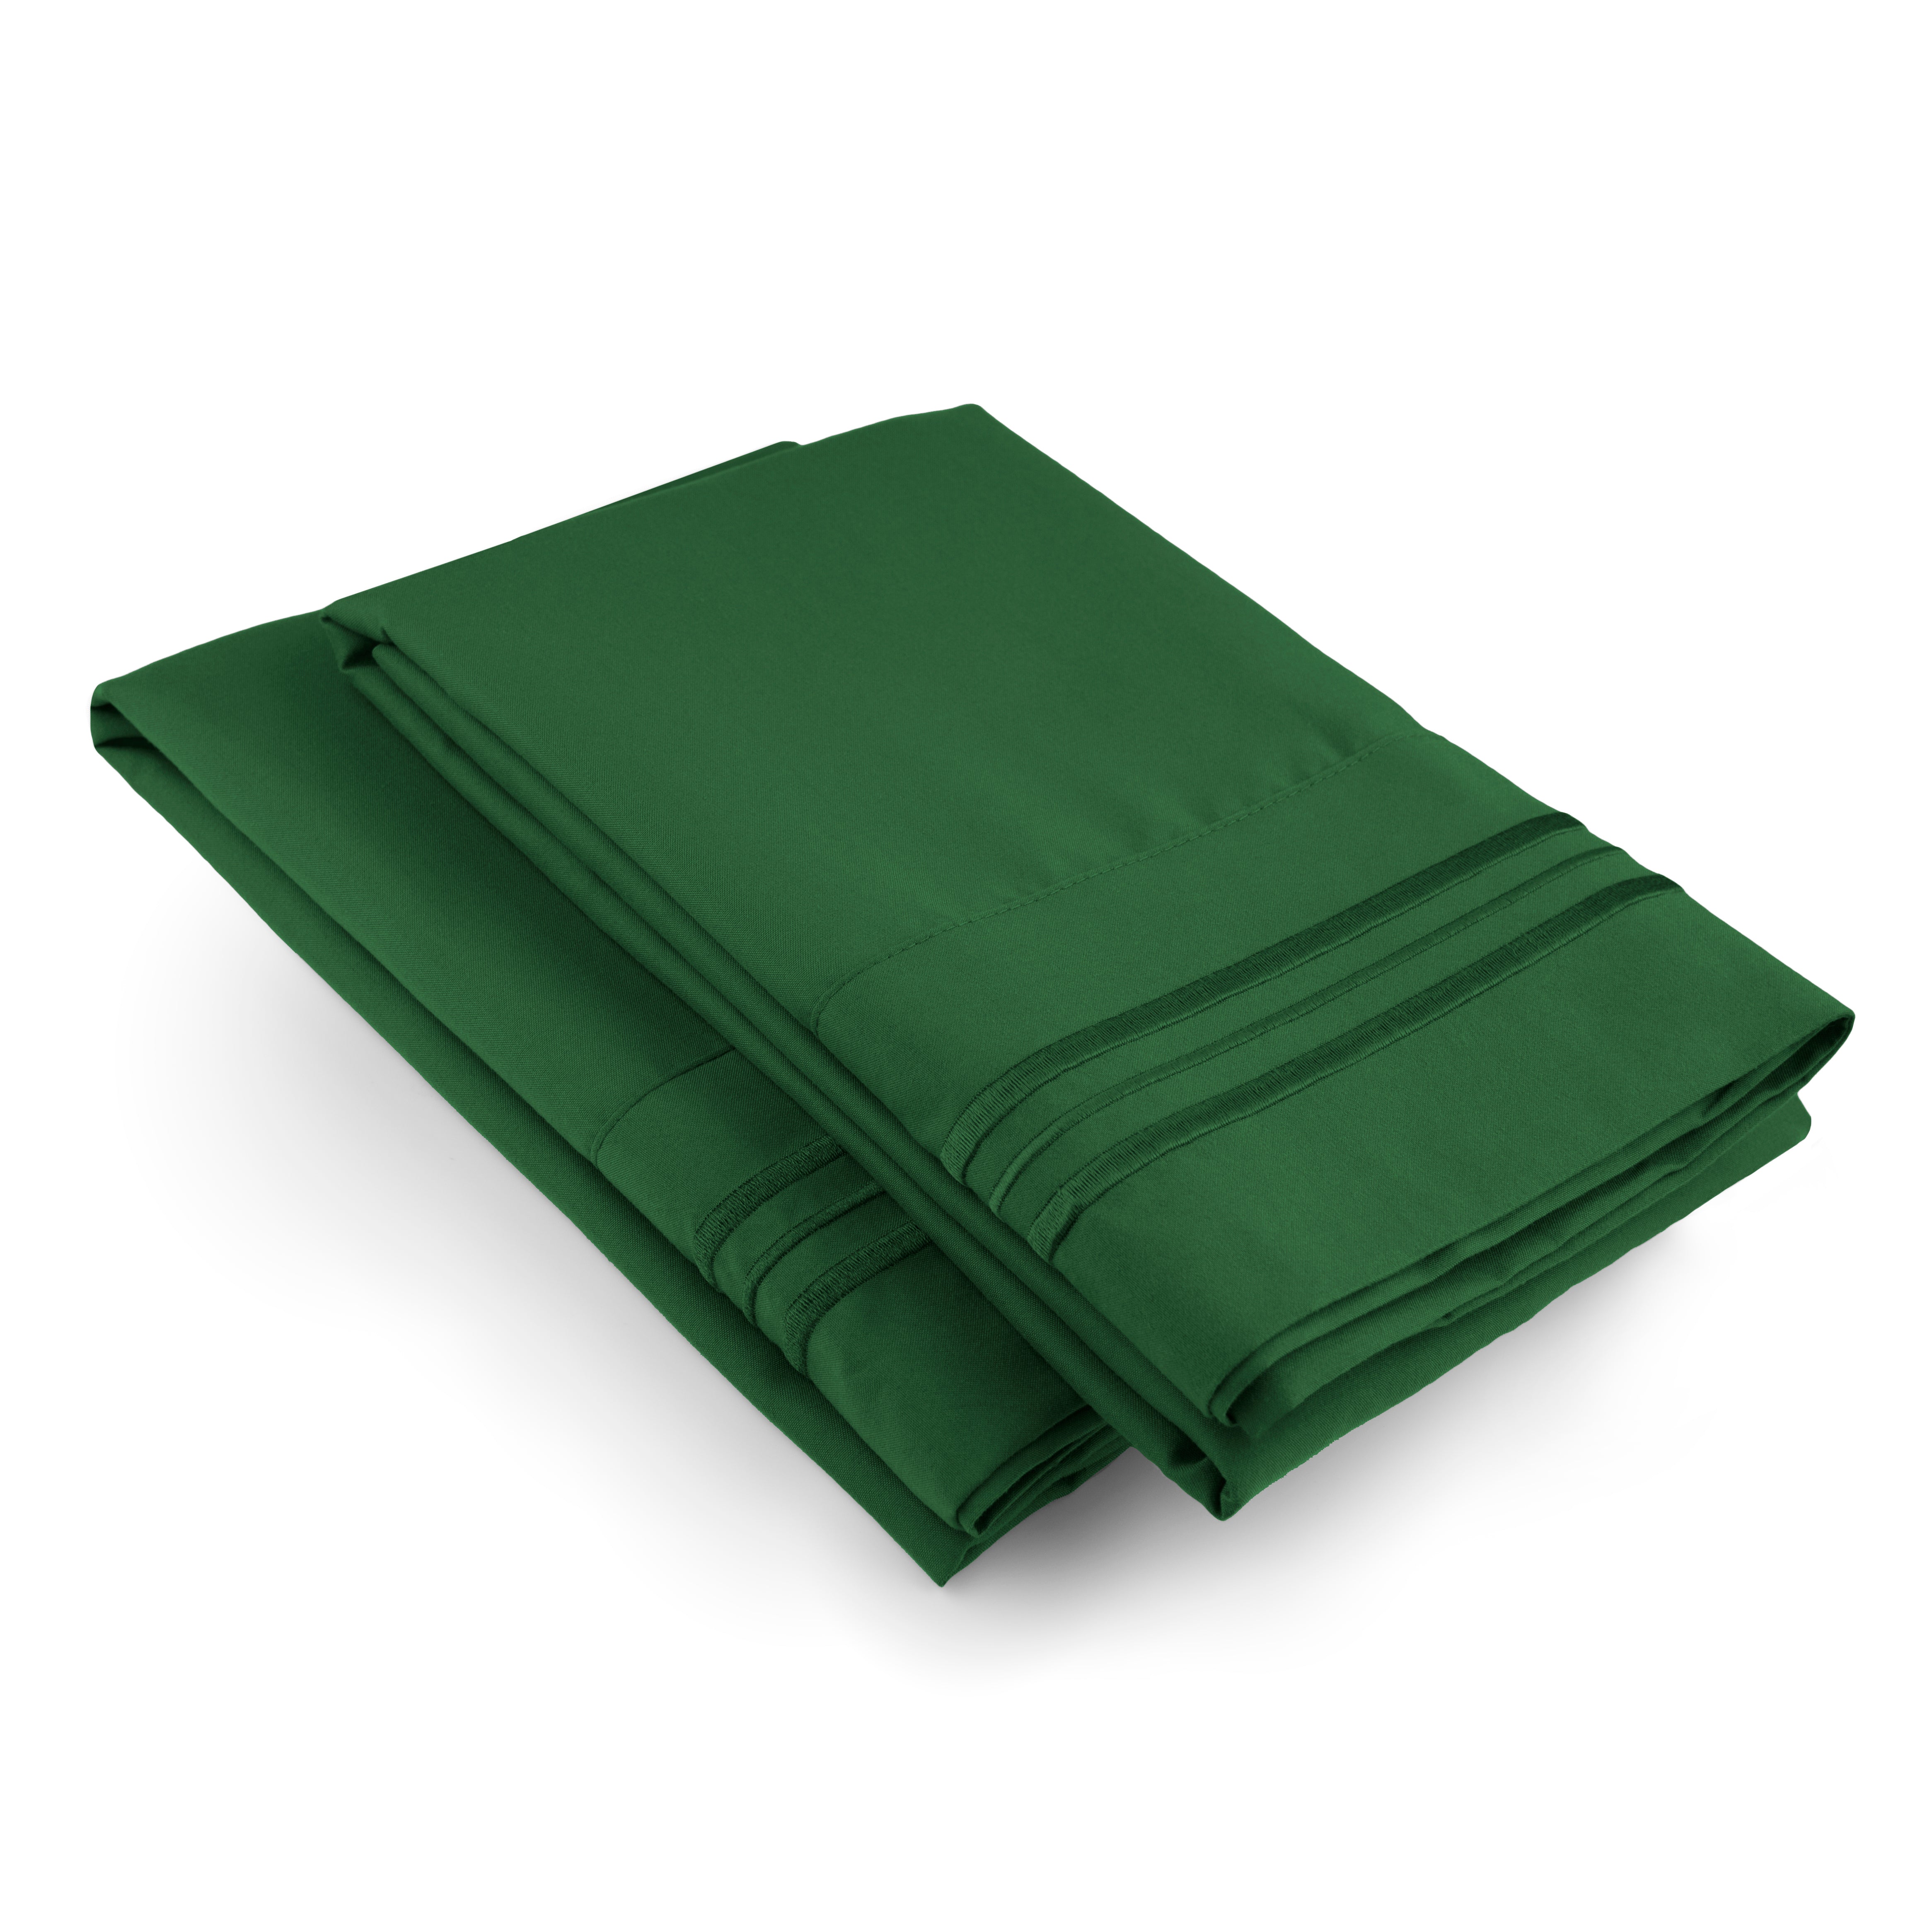 2 Pillowcase Set - Emerald Green